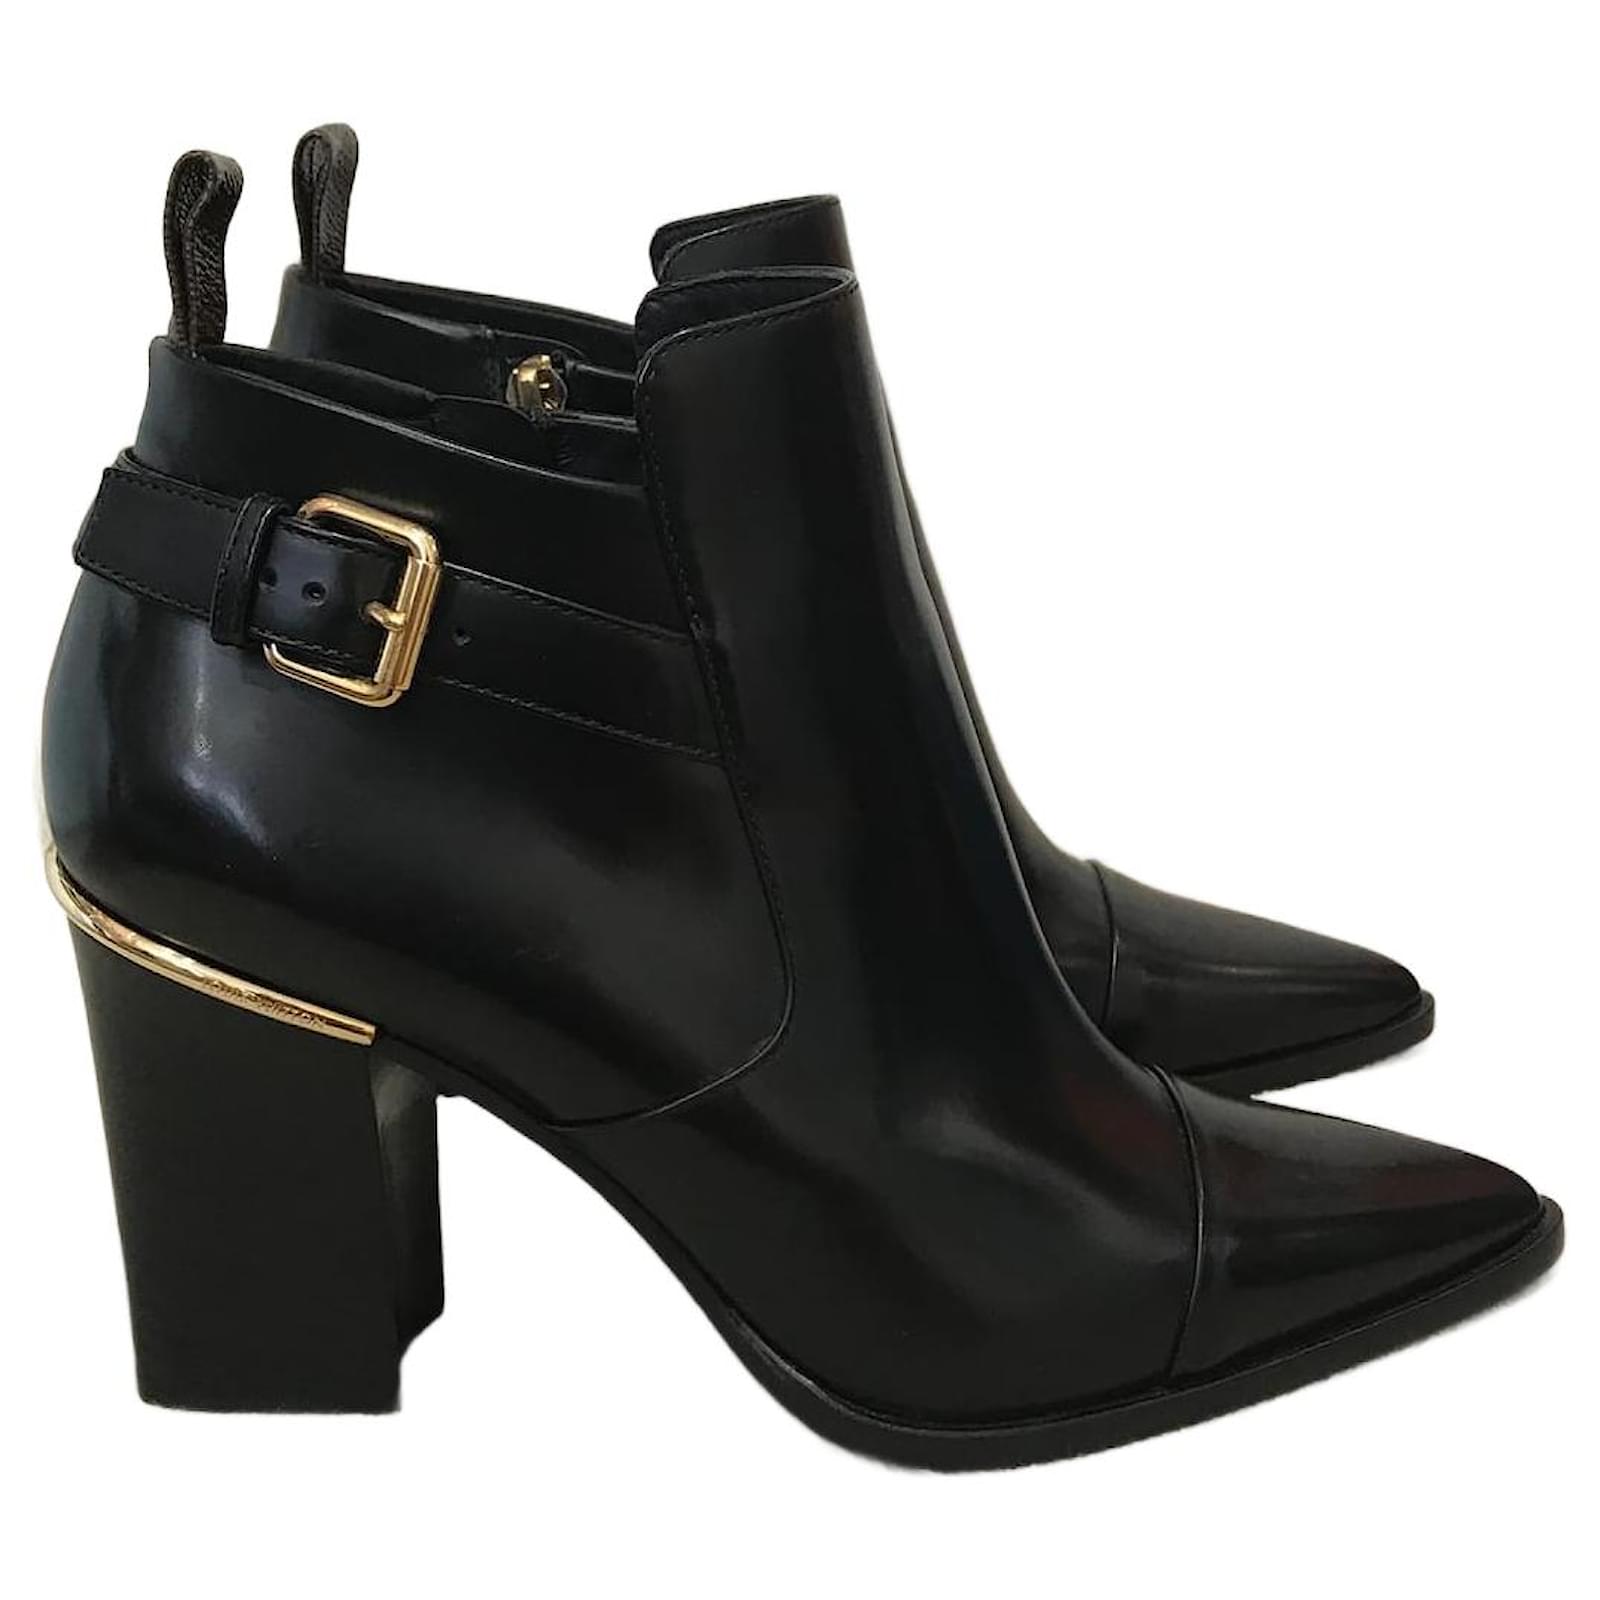 Silhouette cloth ankle boots Louis Vuitton Black size 36.5 EU in